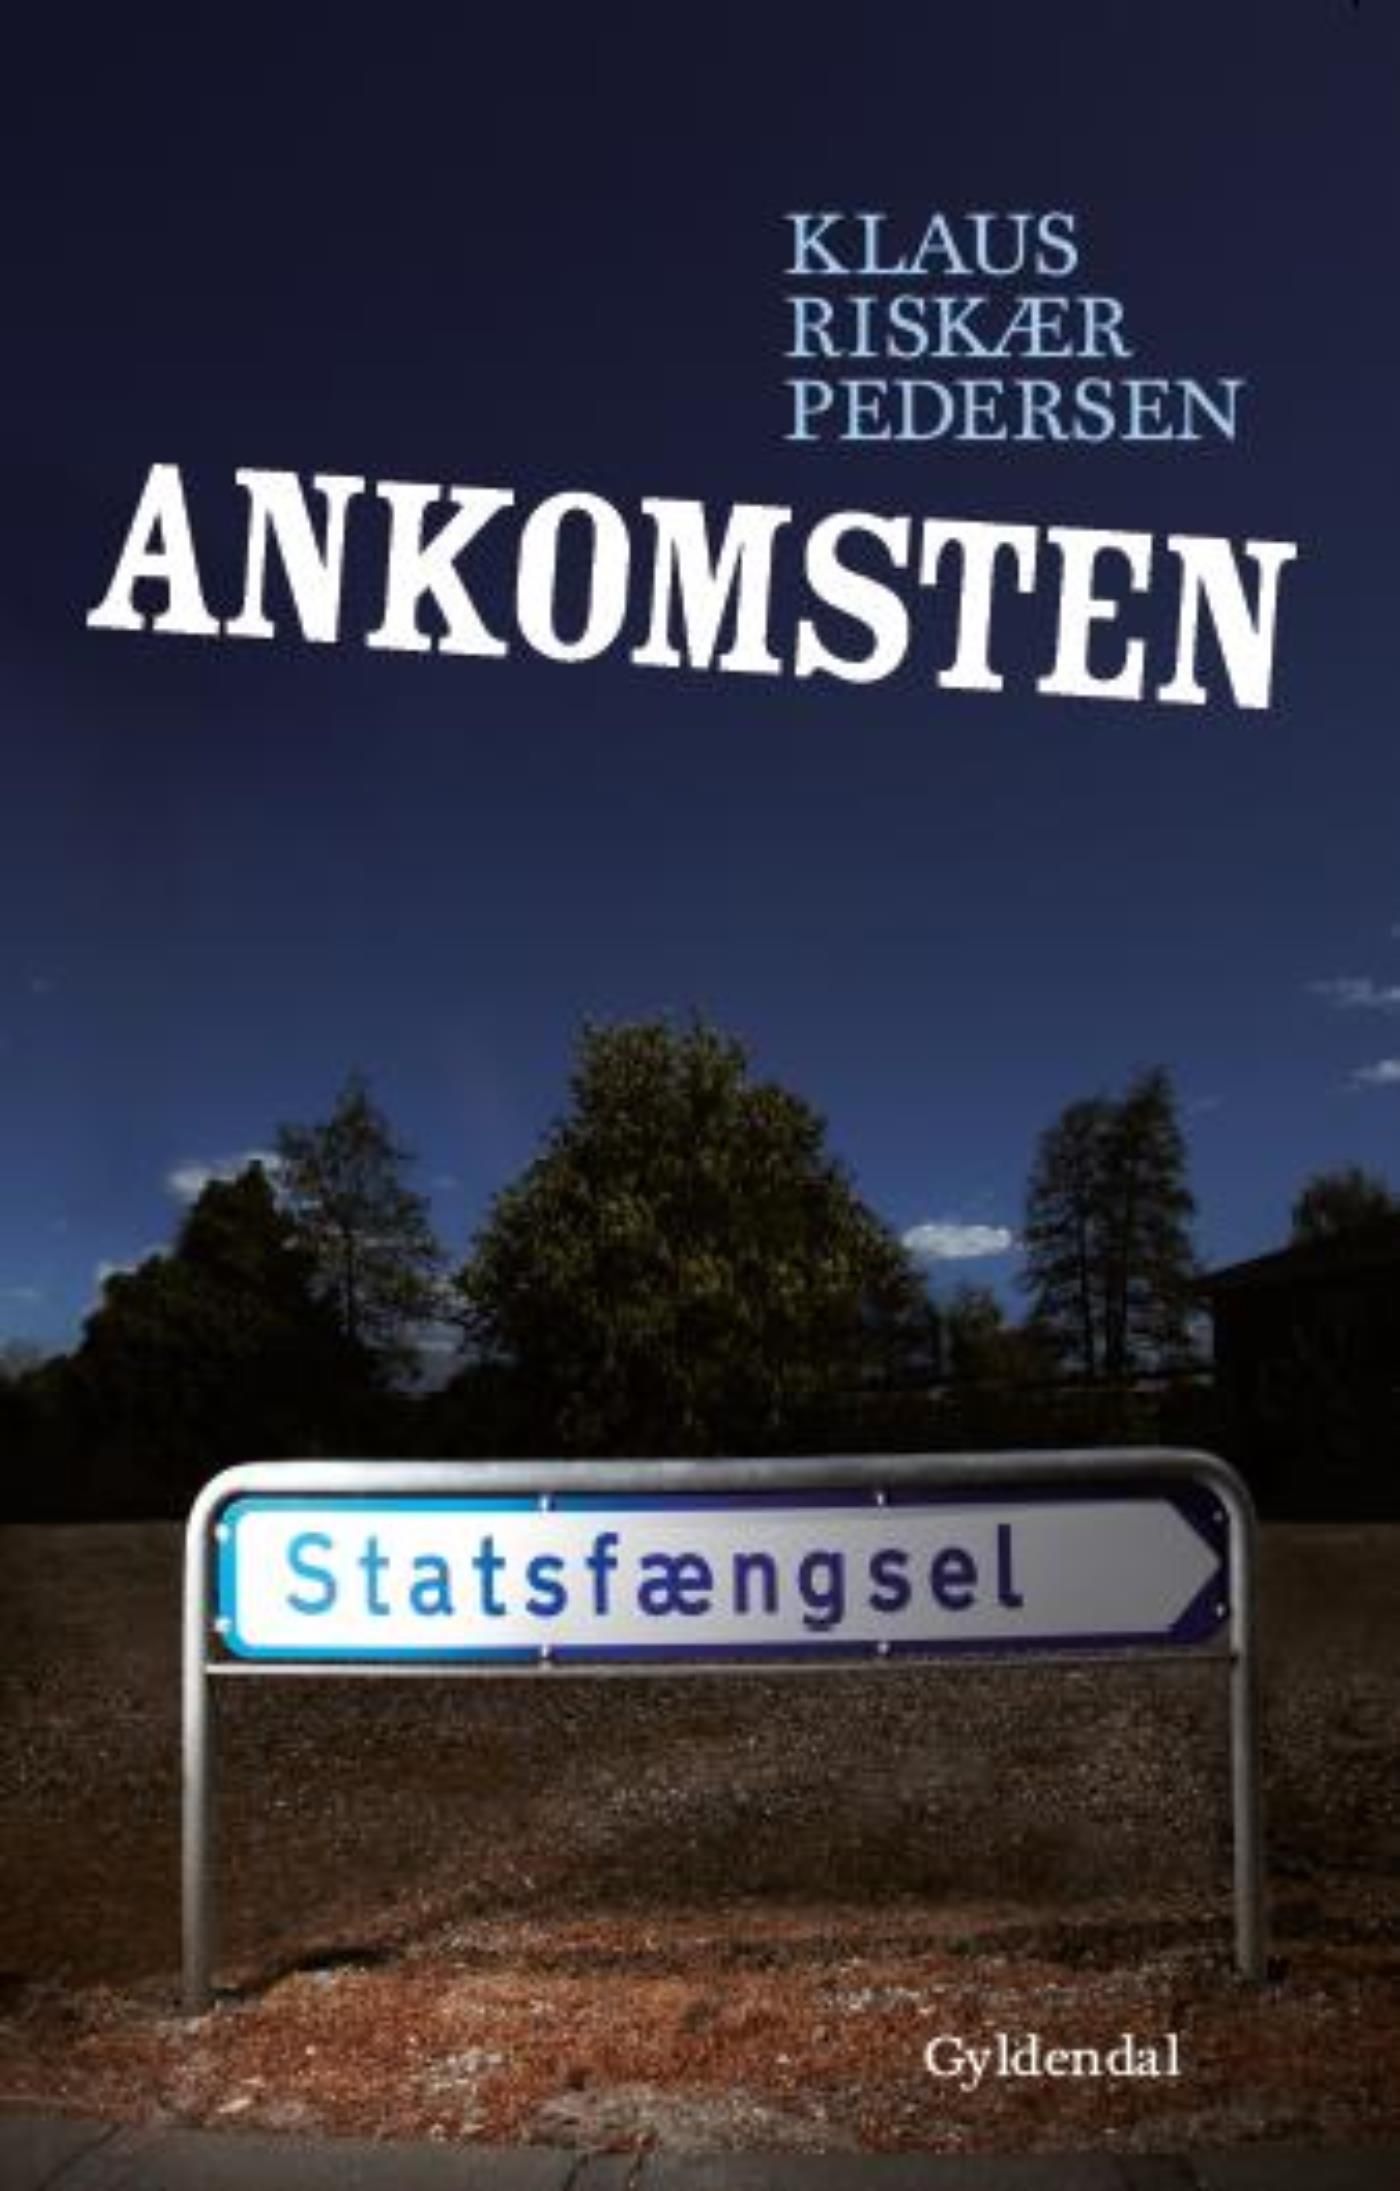 Ankomsten, e-bok av Klaus Riskær Pedersen